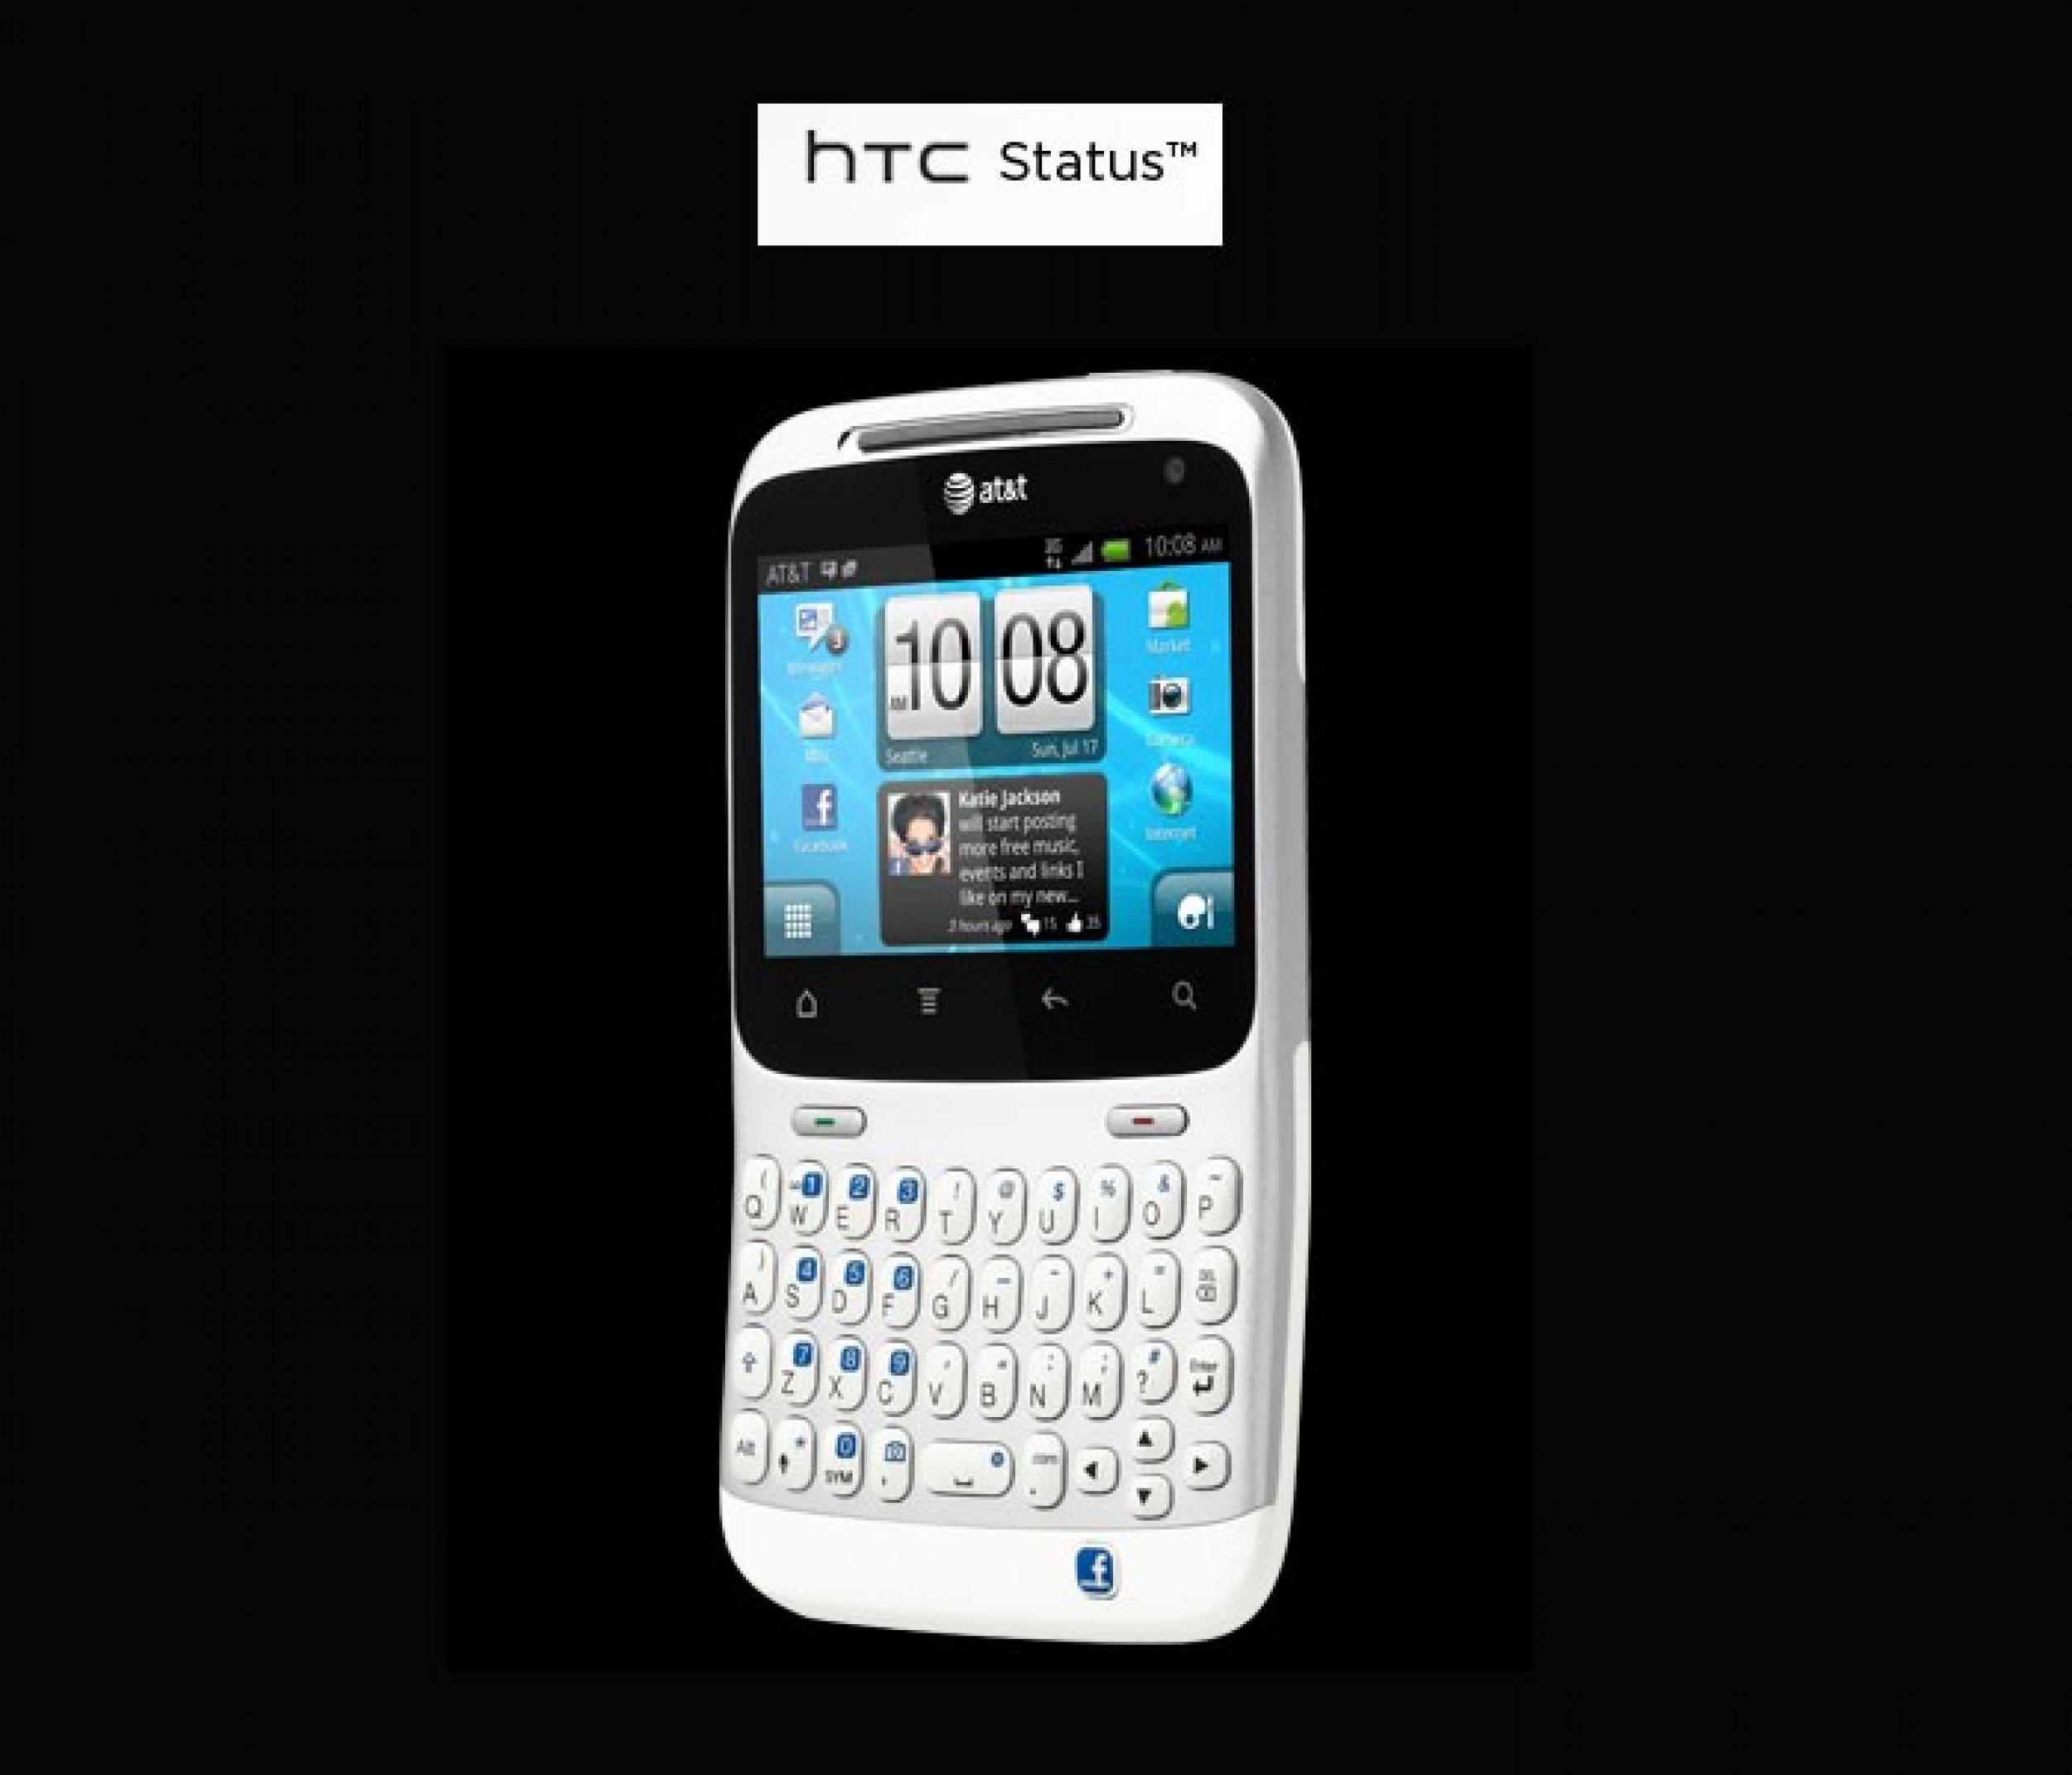 HTC Status